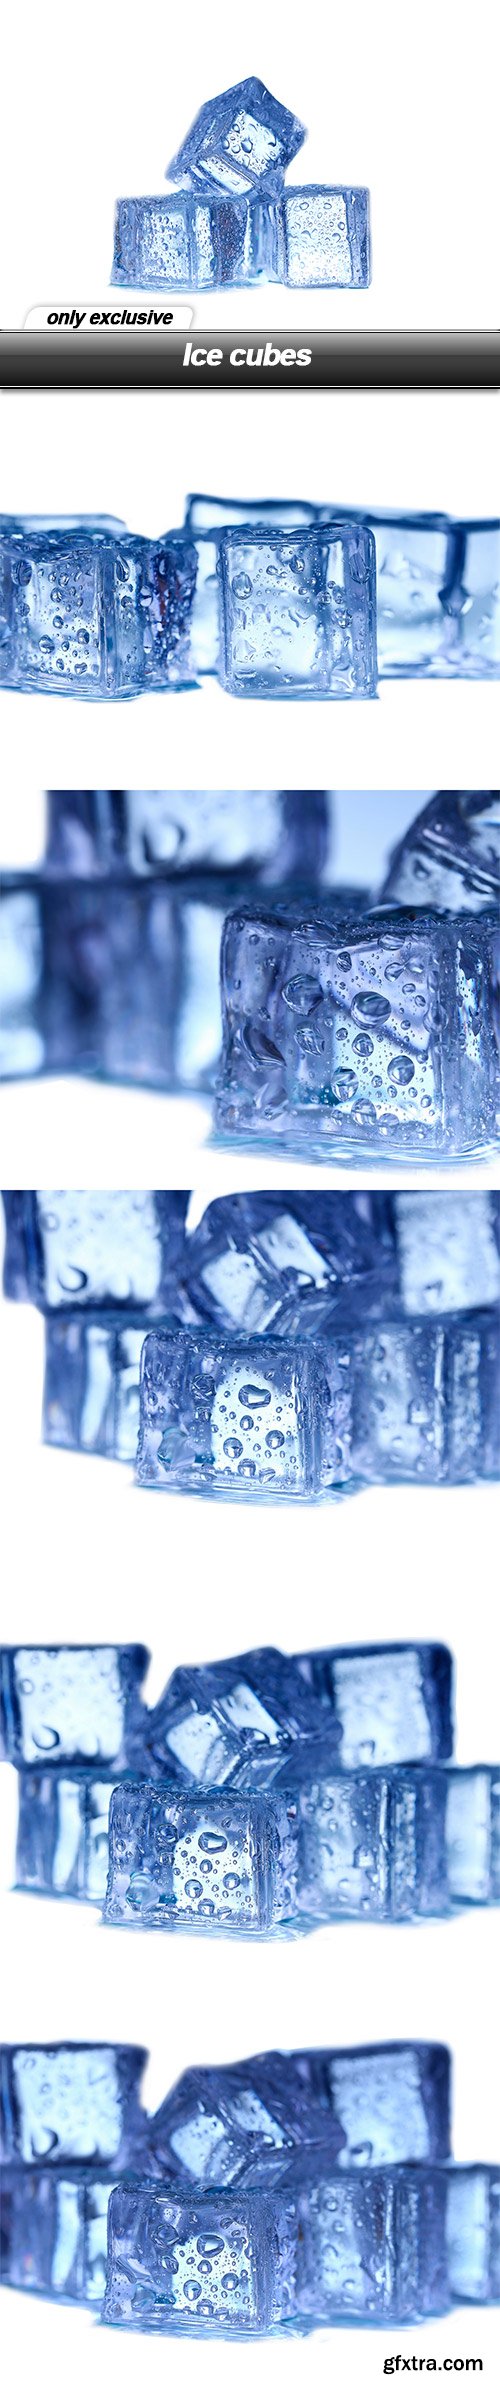 Ice cubes - 6 UHQ JPEG